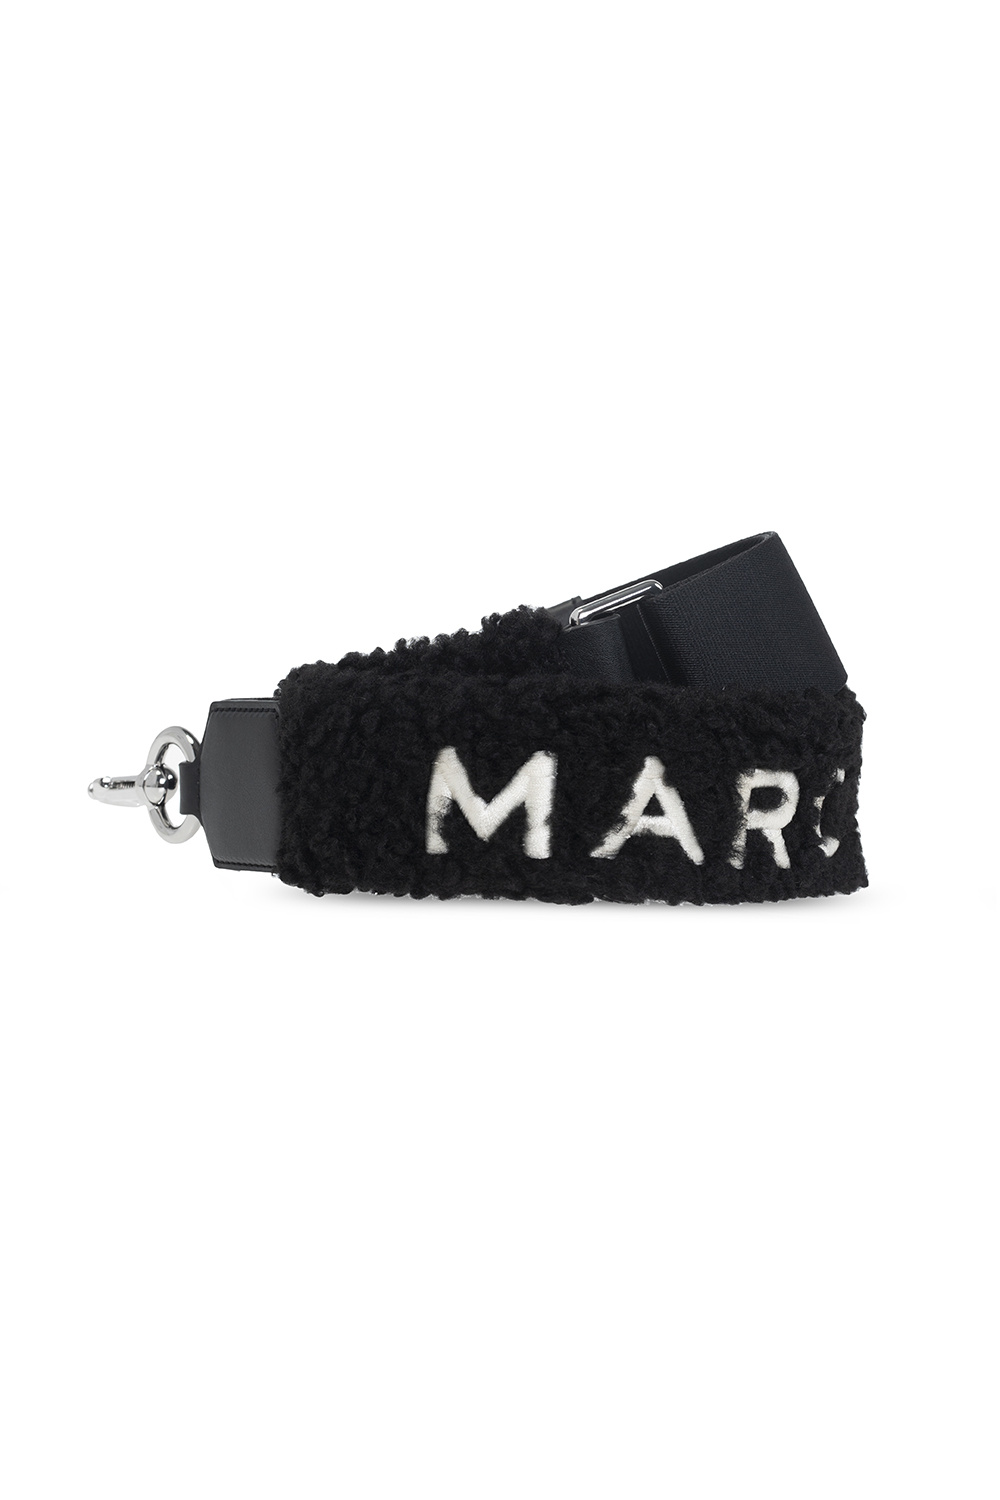 Marc Jacobs Marc Jacobs The Snapshot shearling crossbody bag